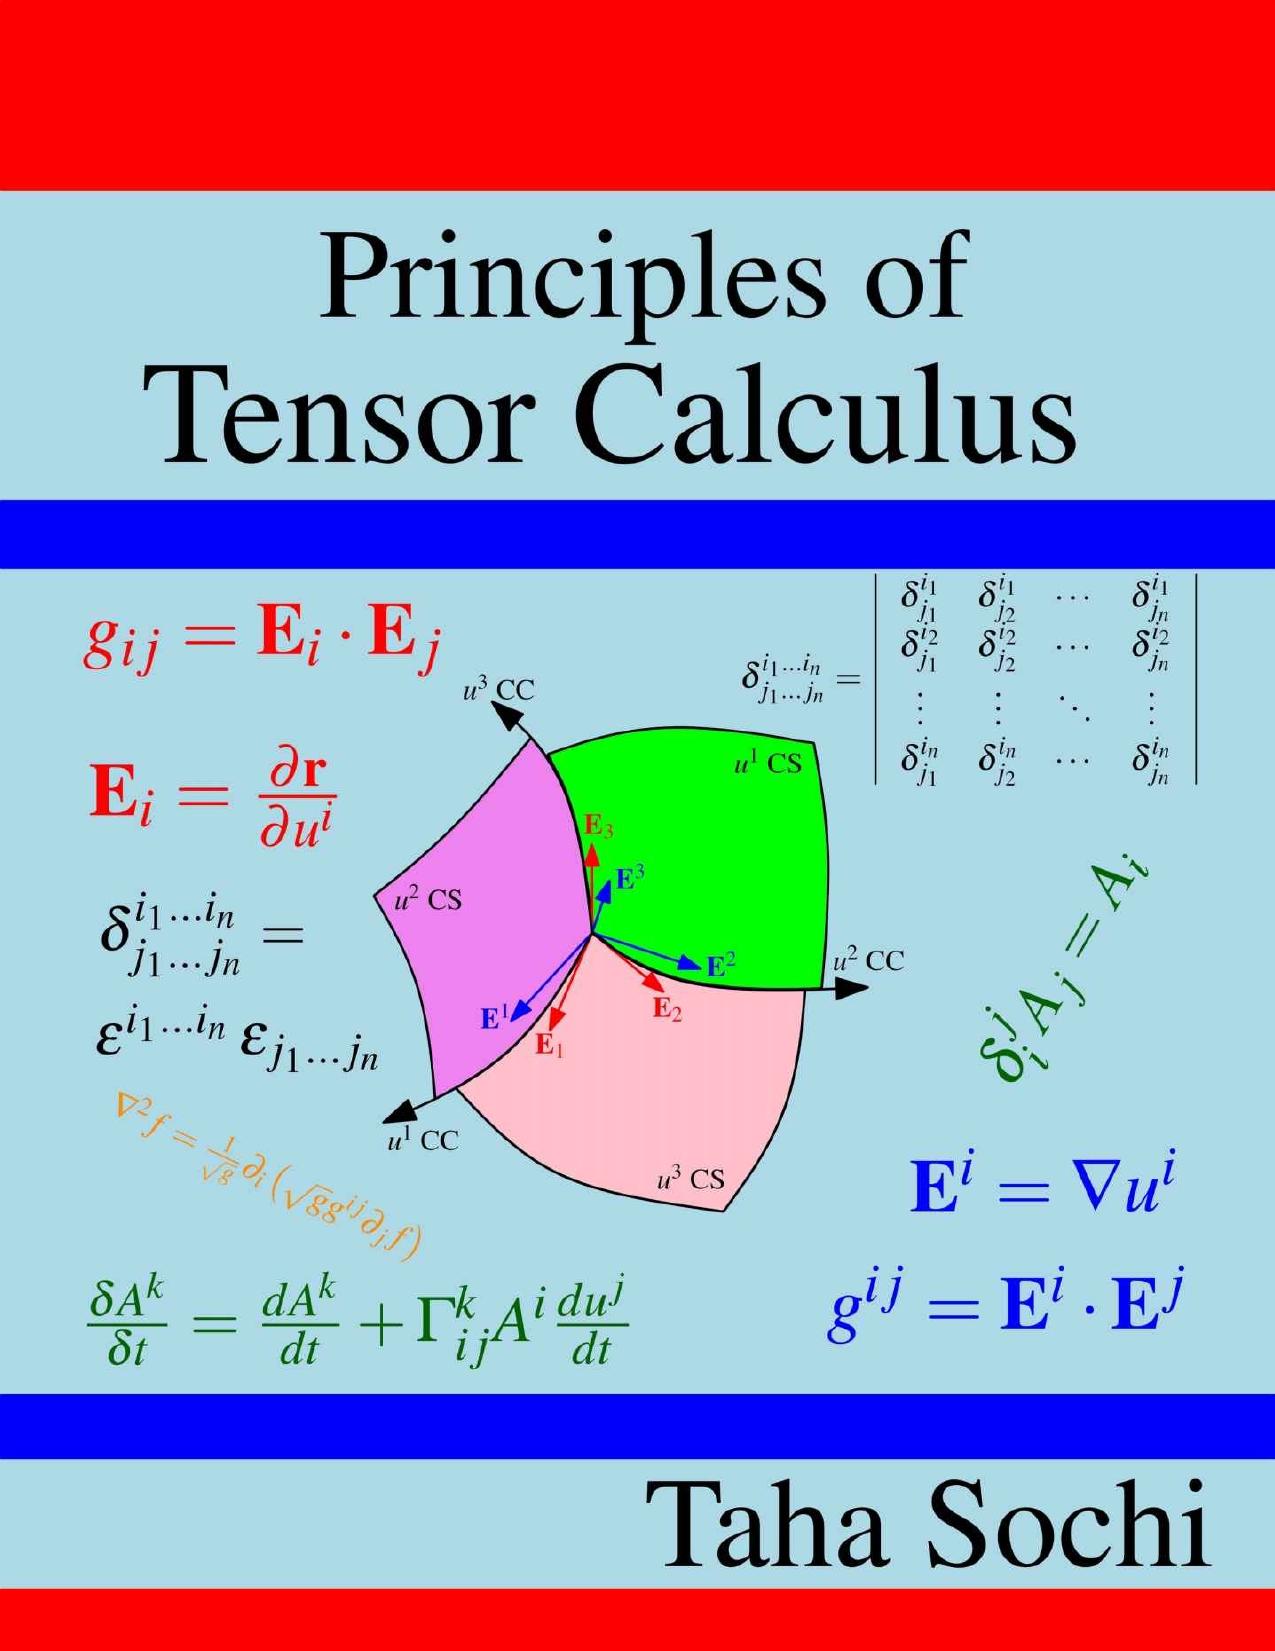 Principles of Tensor Calculus: Tensor Calculus - PDFDrive.com